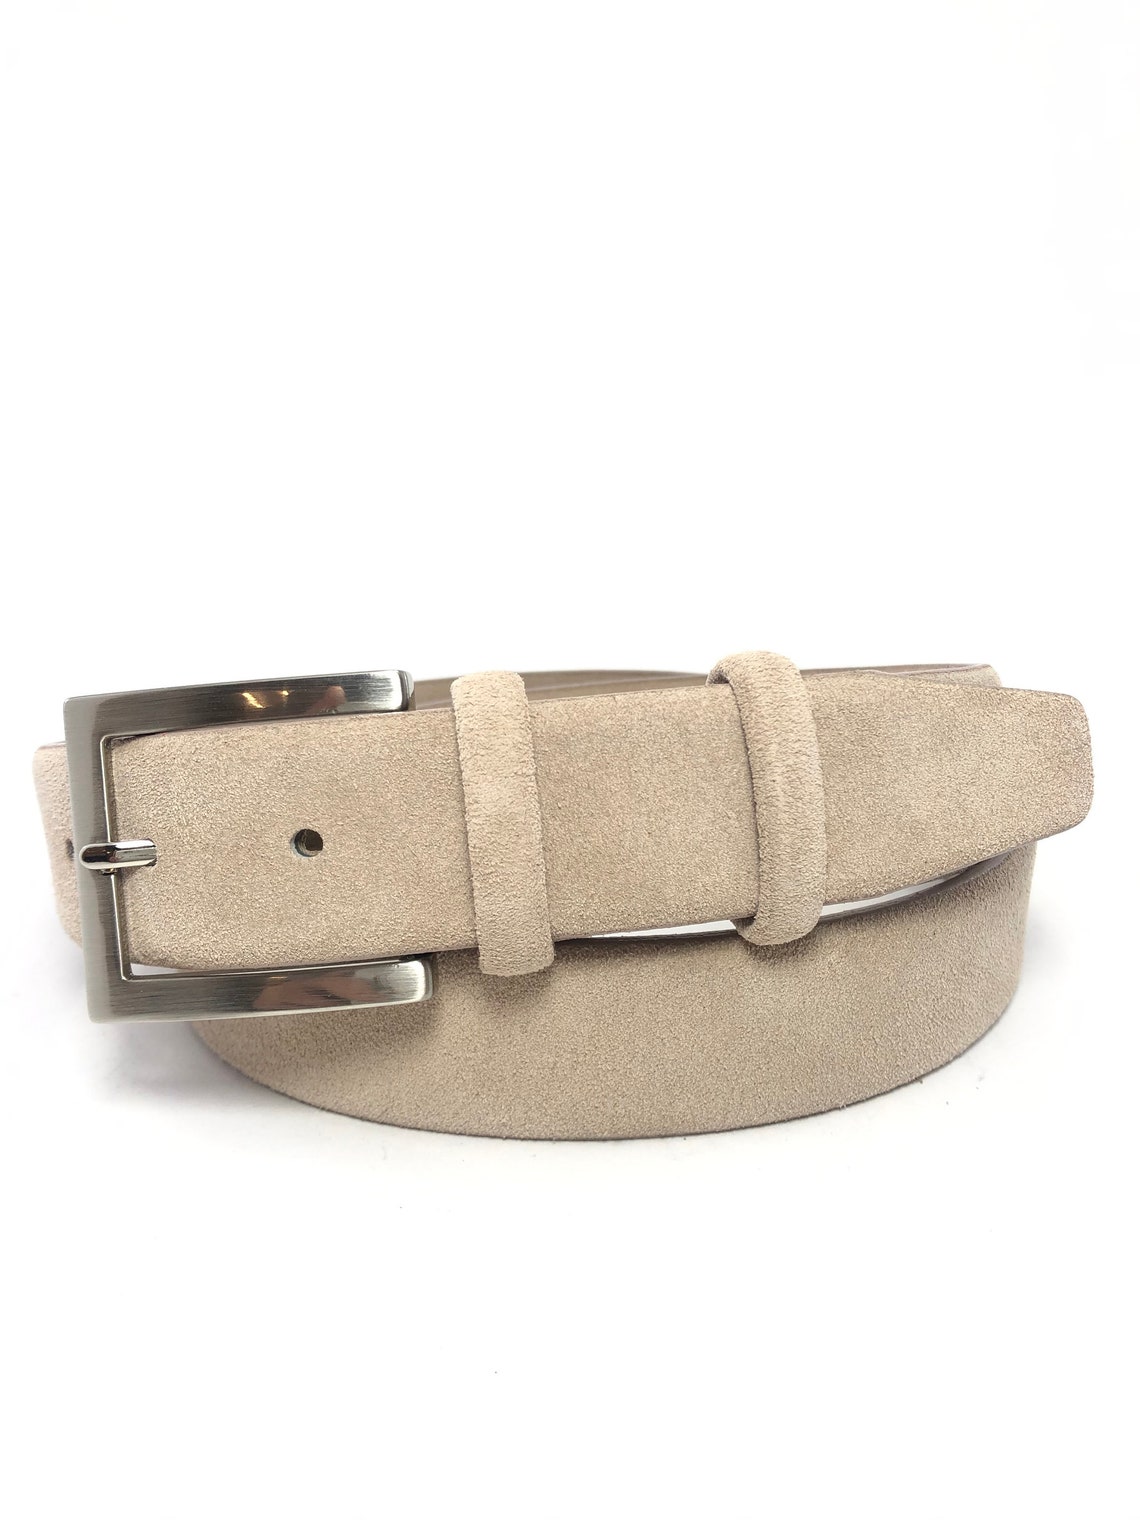 35cm Beige Suede Belts Waist Belts Handmade Real Leather | Etsy